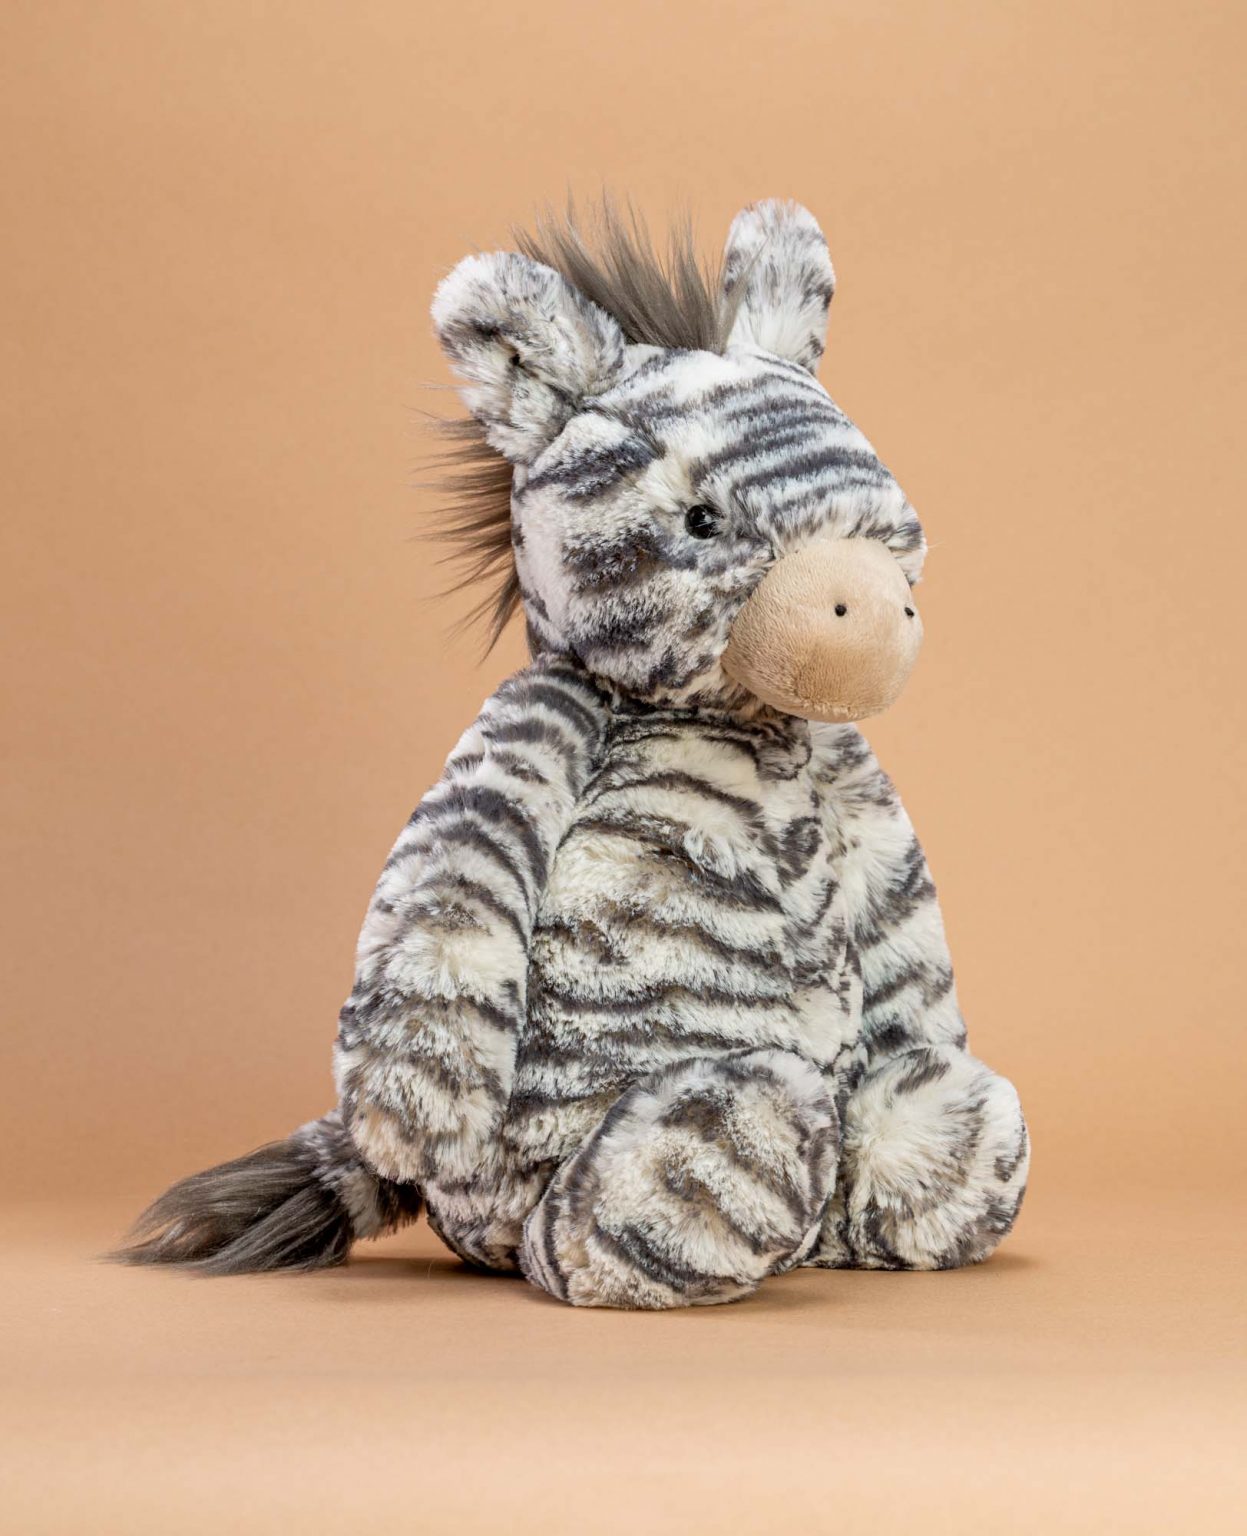 Zebra Soft Toy Gift - Send a Cuddly